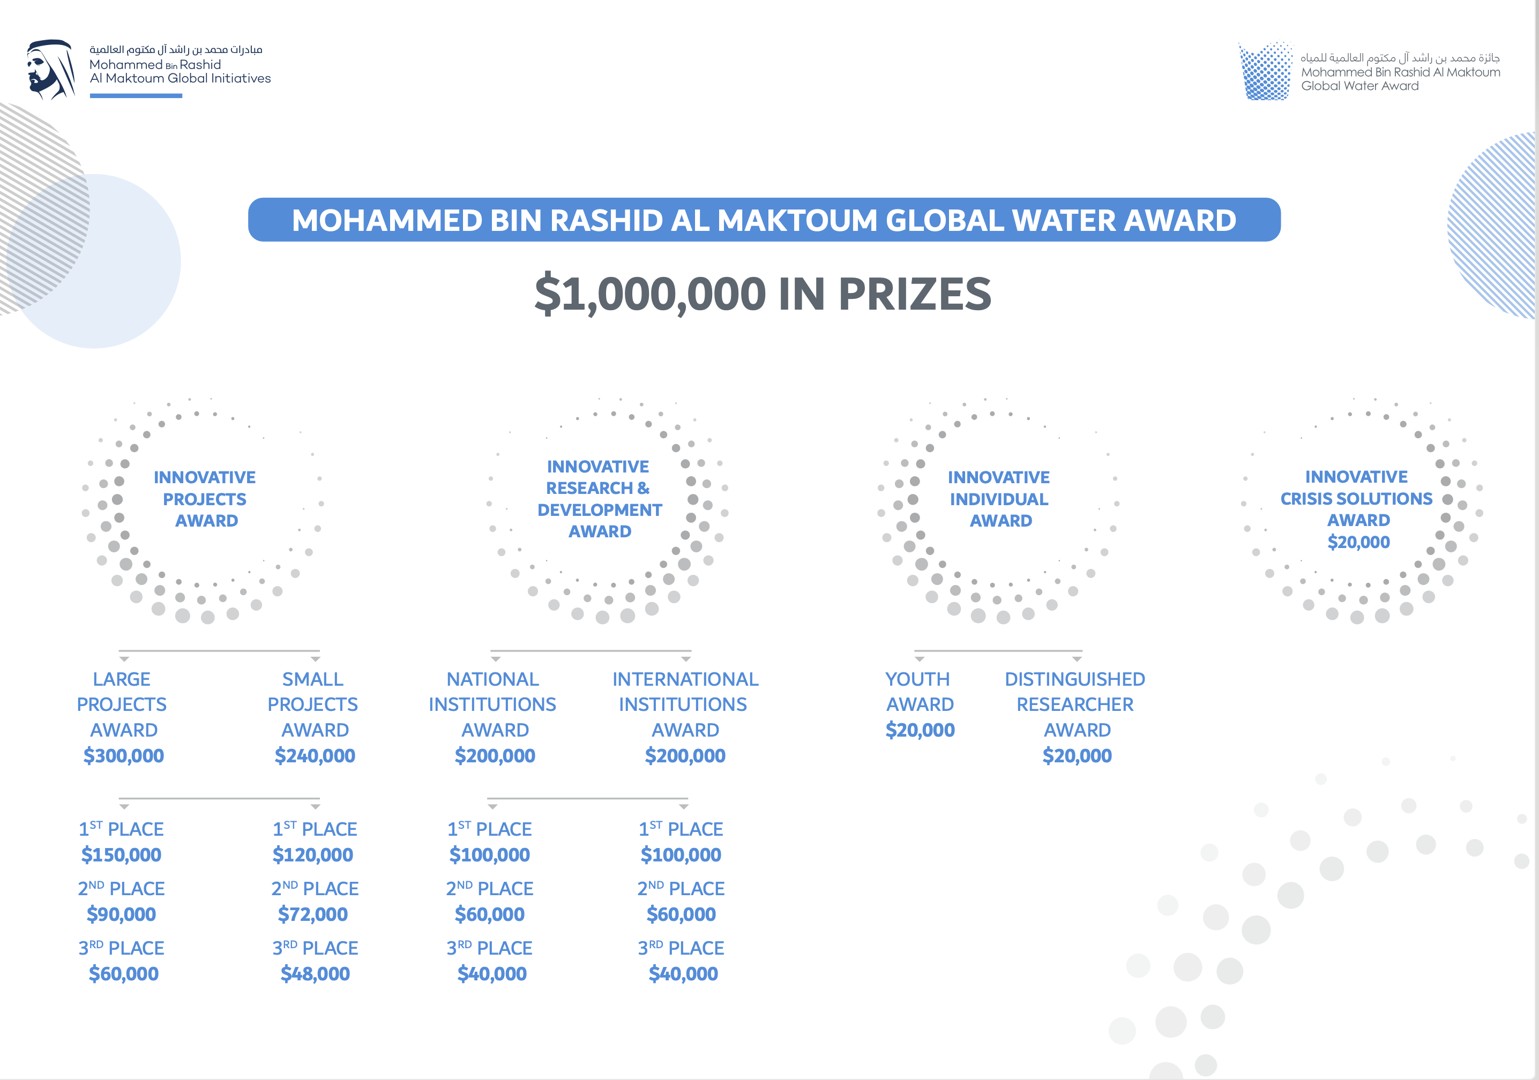 Photo: The Mohammed bin Rashid Al Maktoum Global Water Award extends application deadline until the end of May